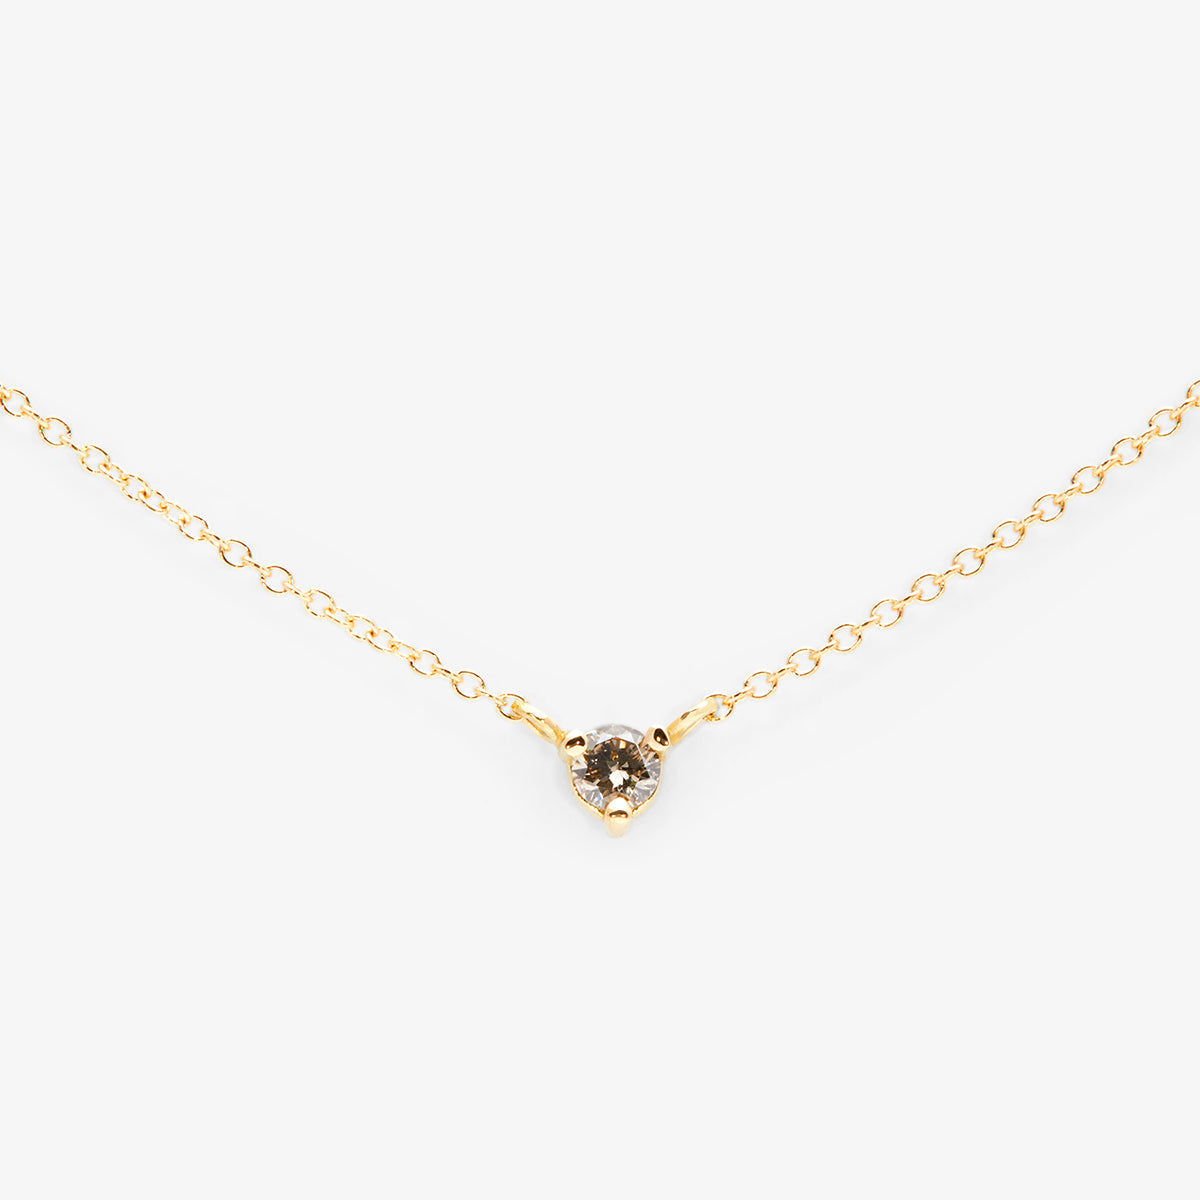 3mm Brown Diamond Birthstone Necklace